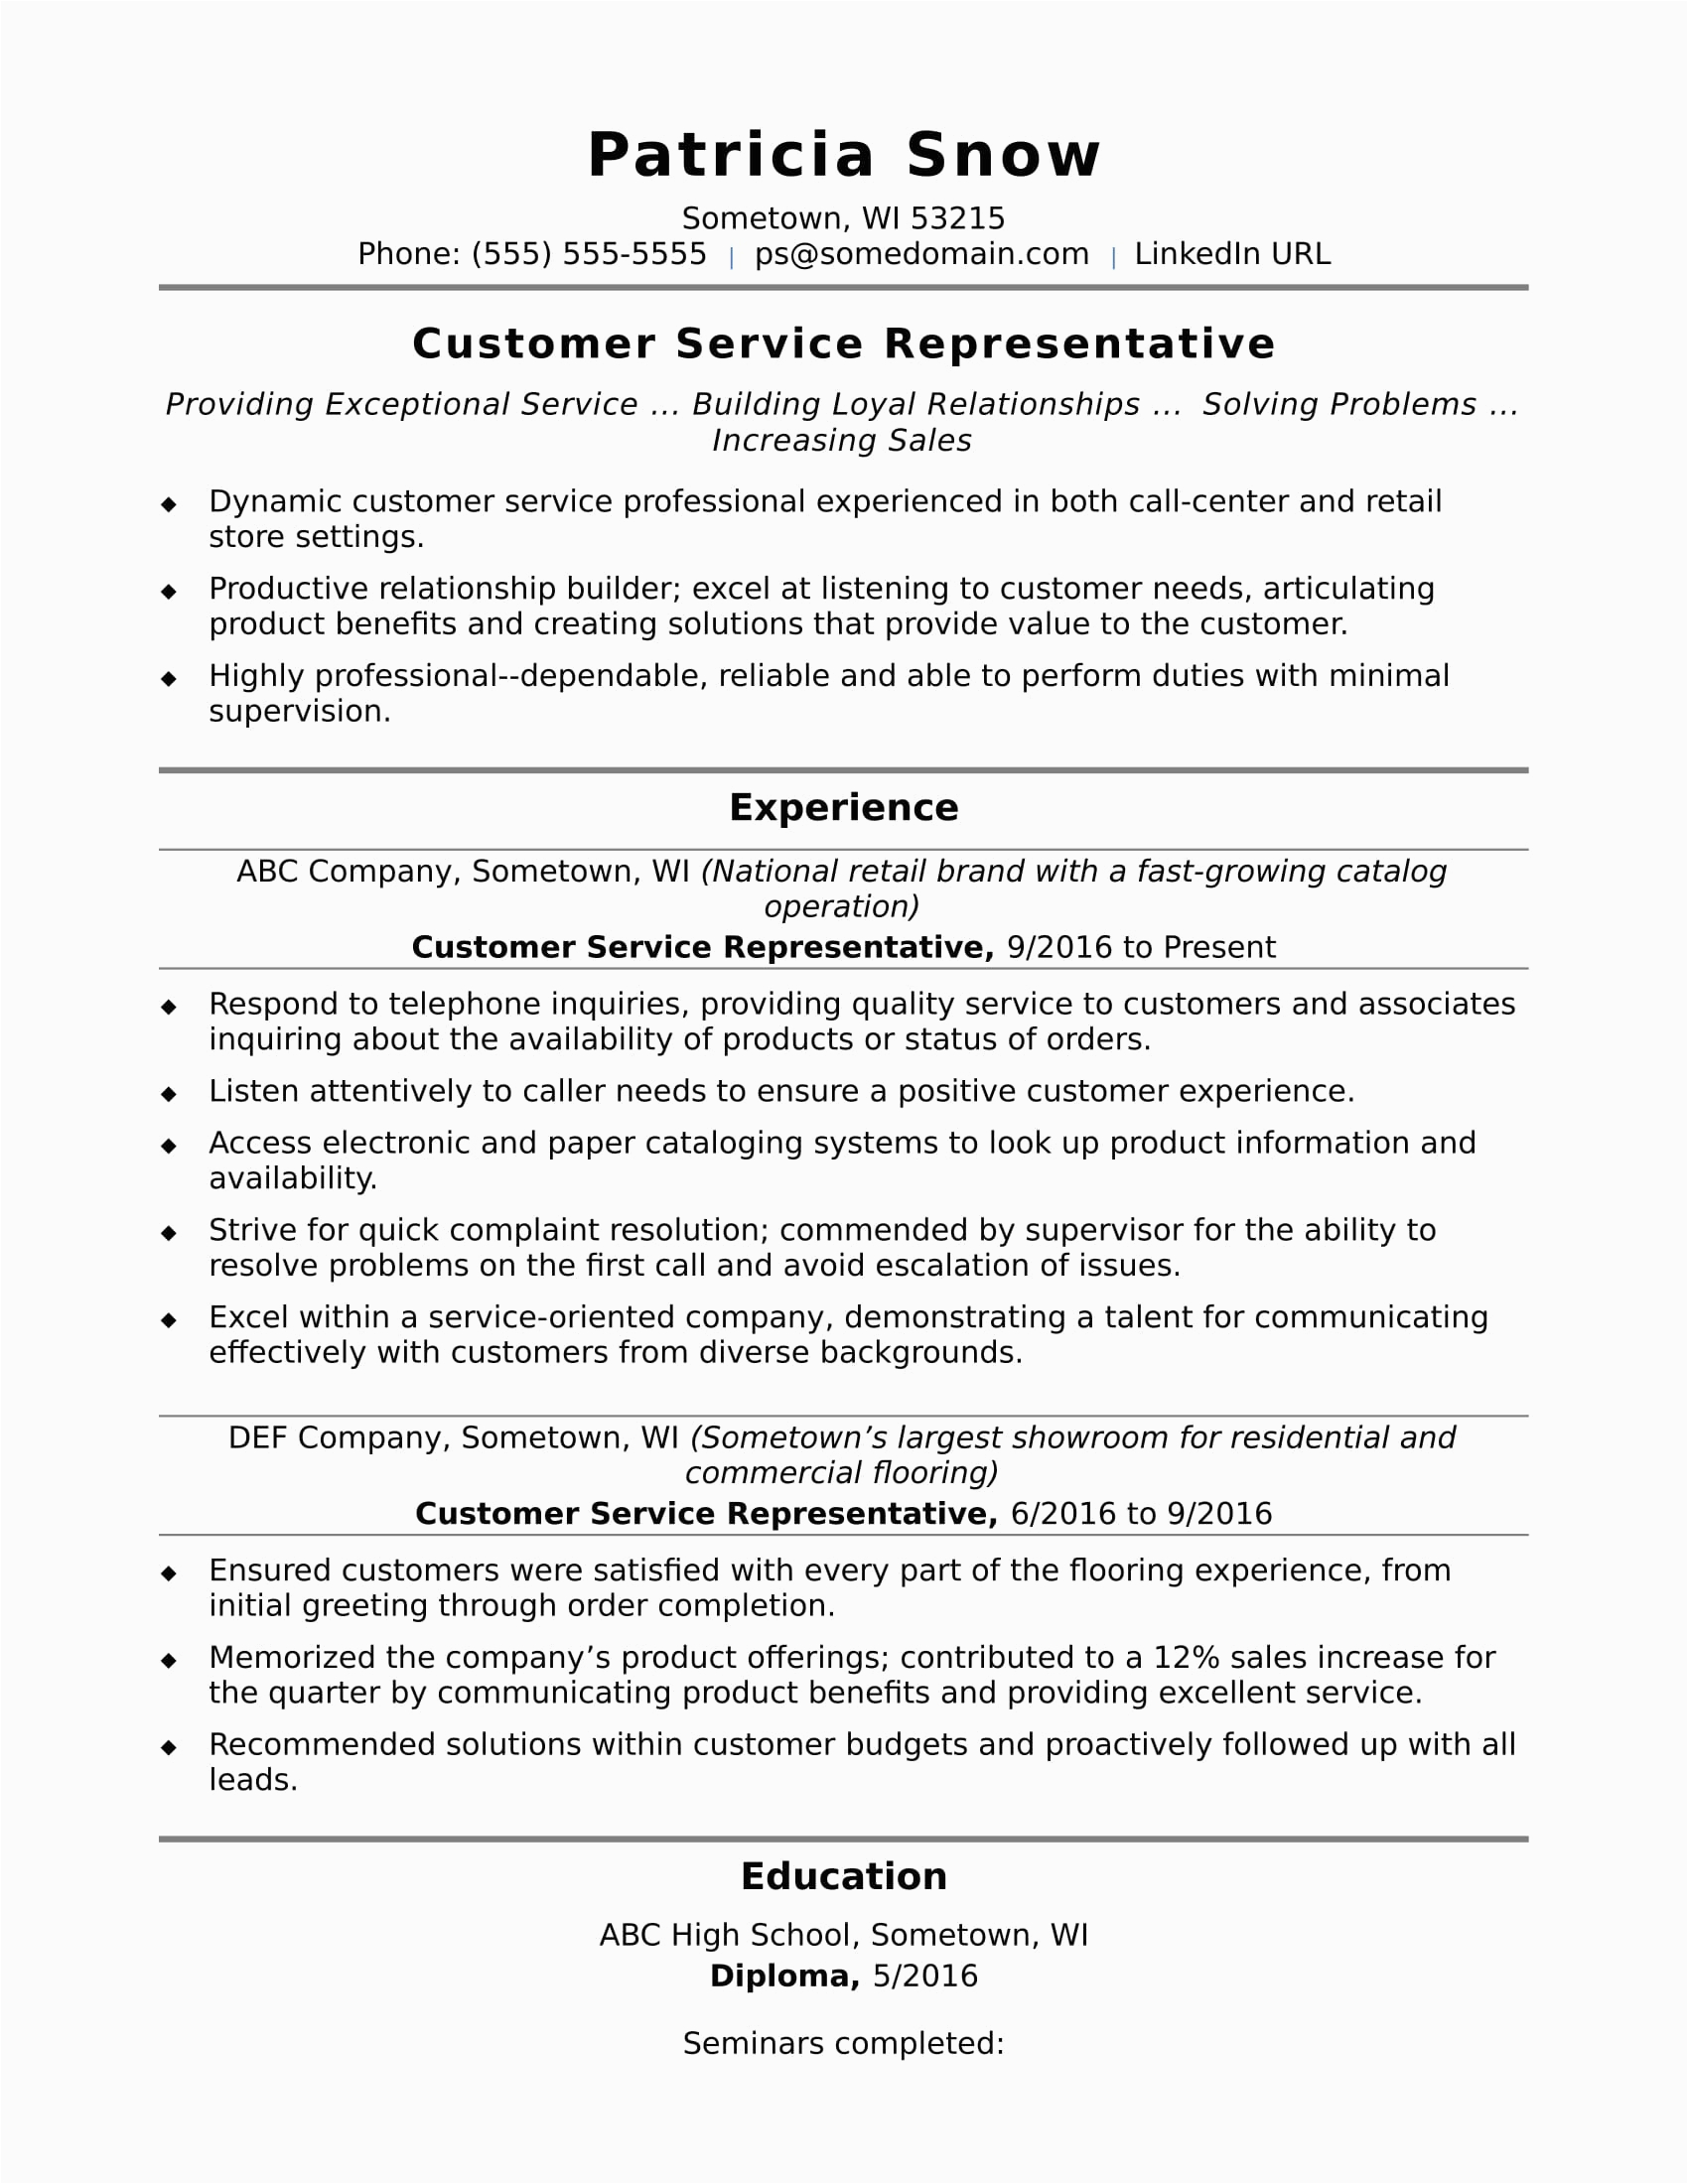 Sample Professional Resume for Customer Service Entry Level Customer Service Resume Sample